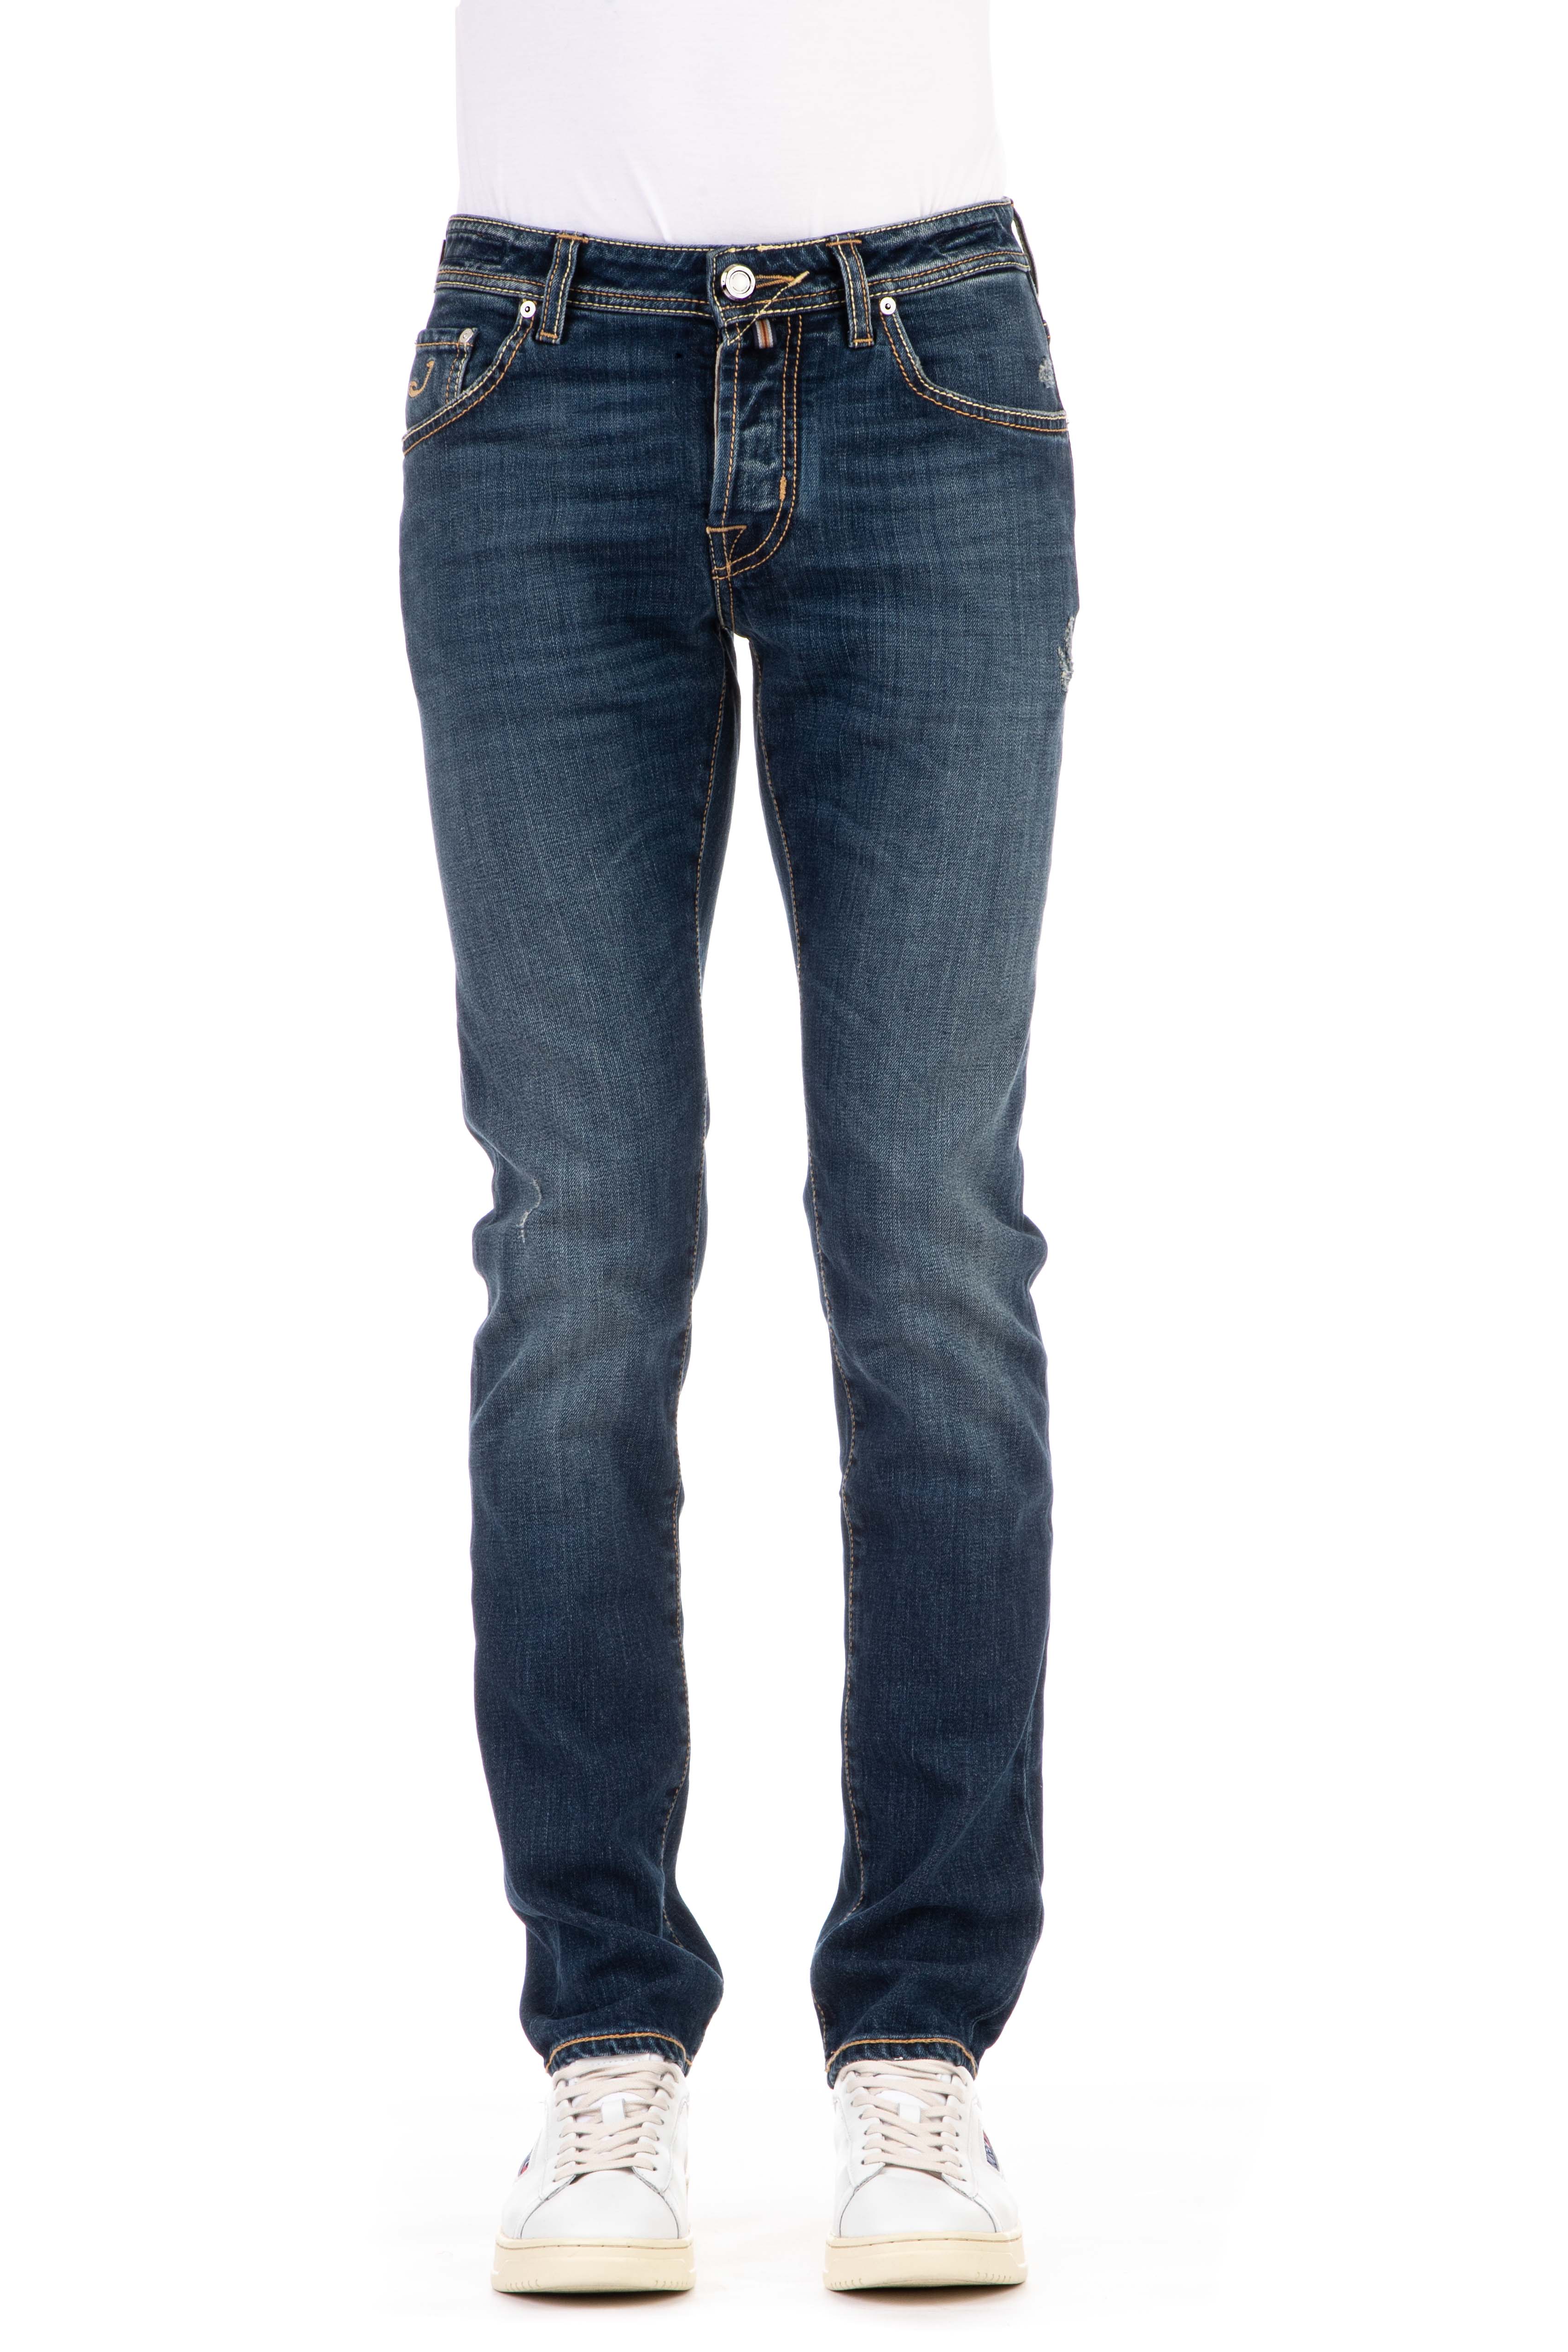 Jeans limited edition etichetta azzurranick fit